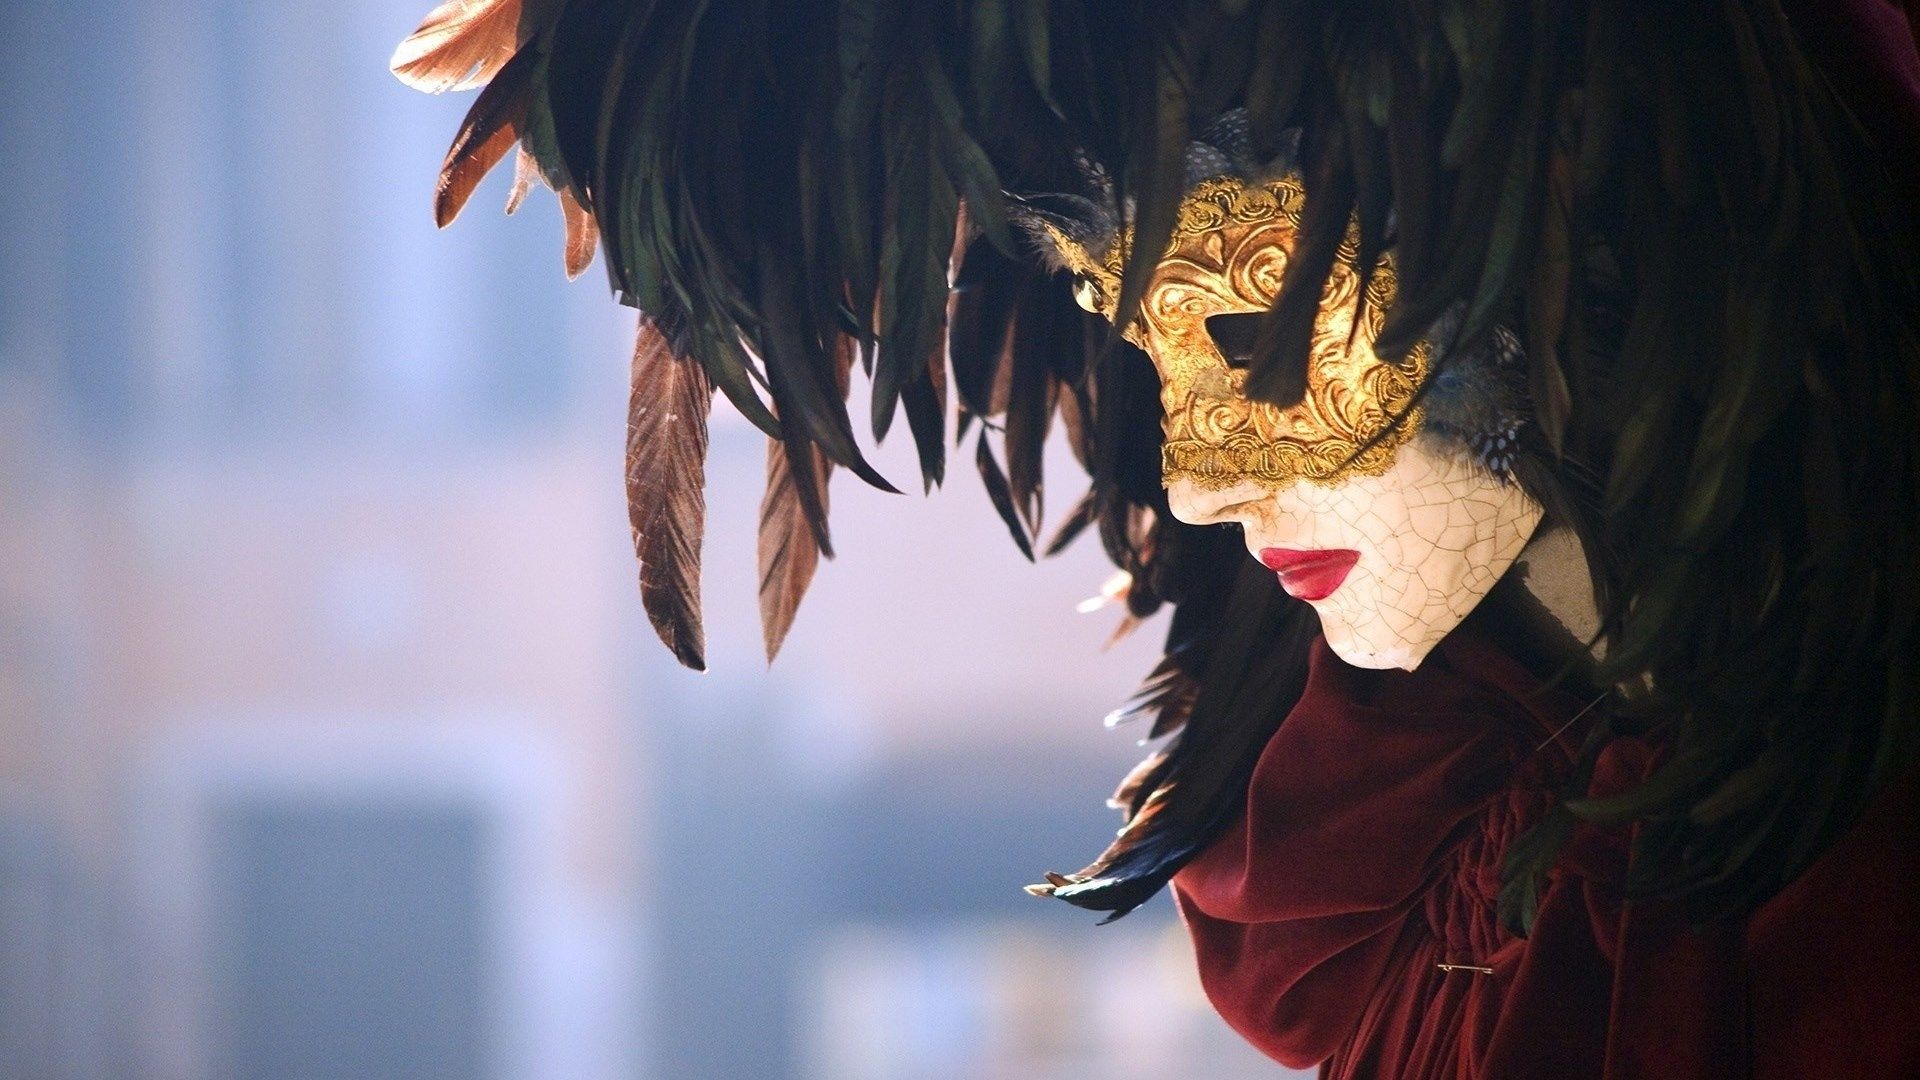 HD wallpaper, Mask, Carnival, Venice, Girl, Of